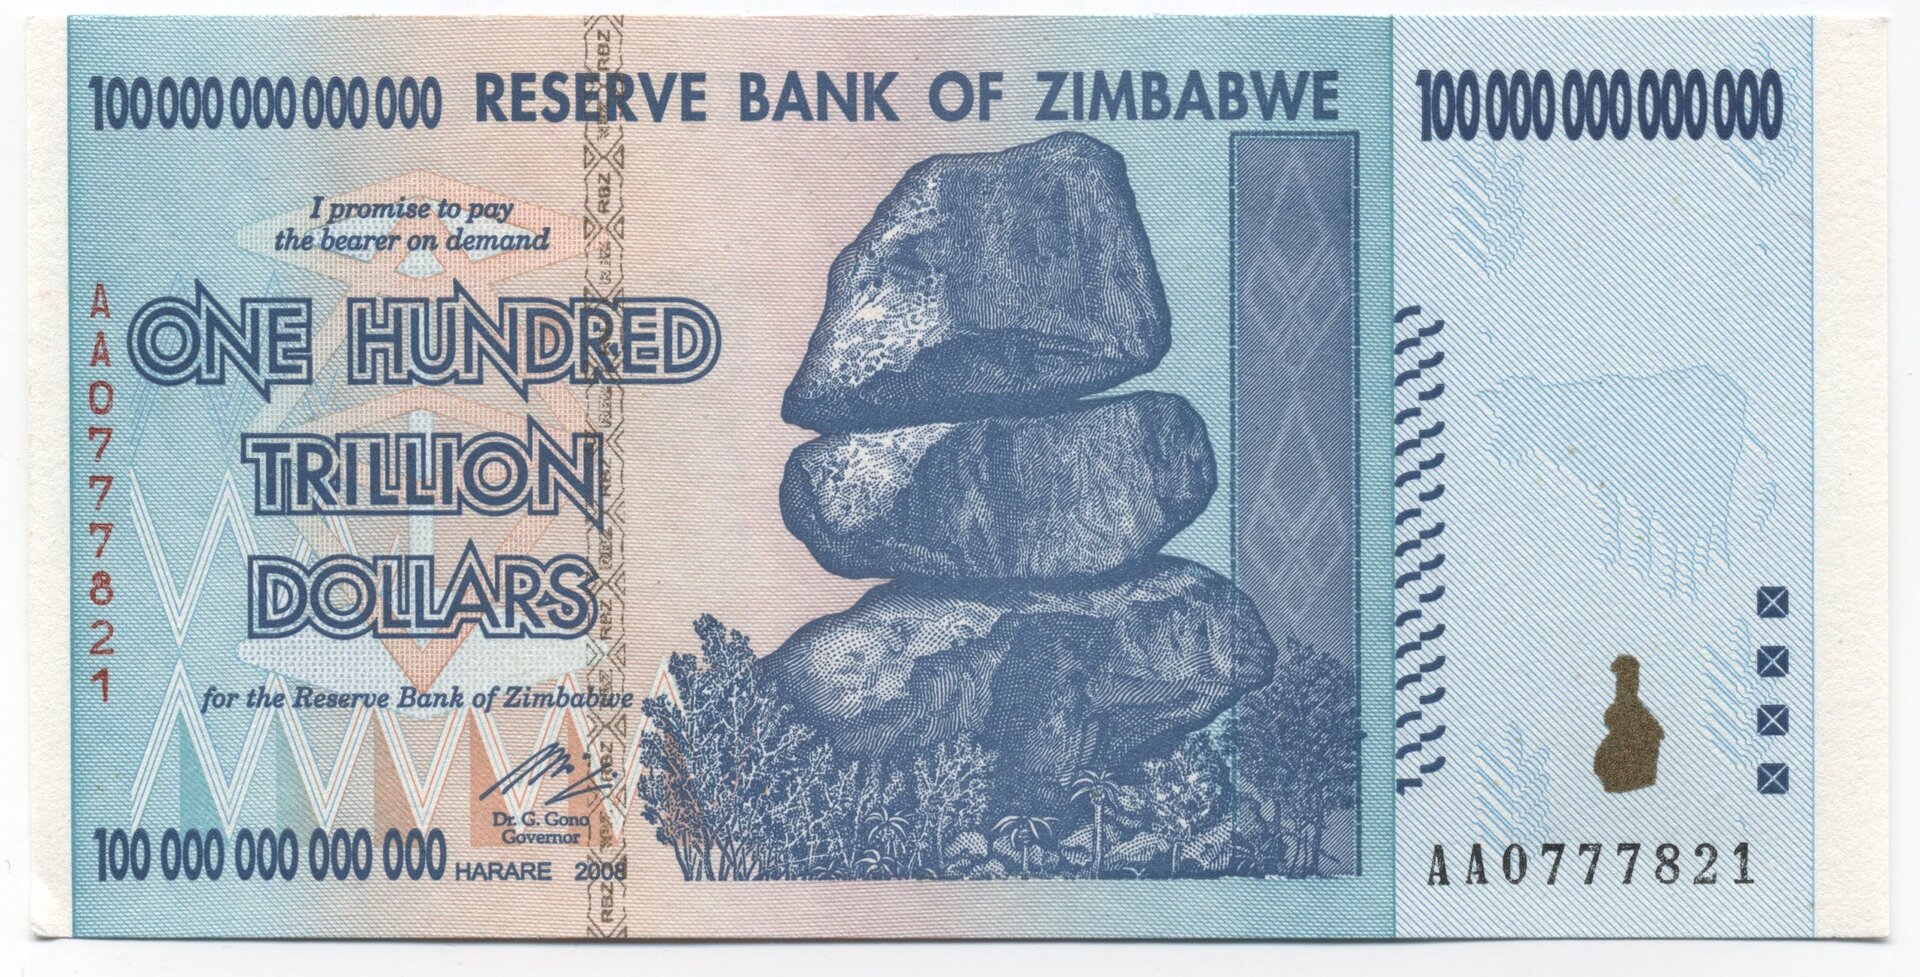 zimbabwe money.jpg